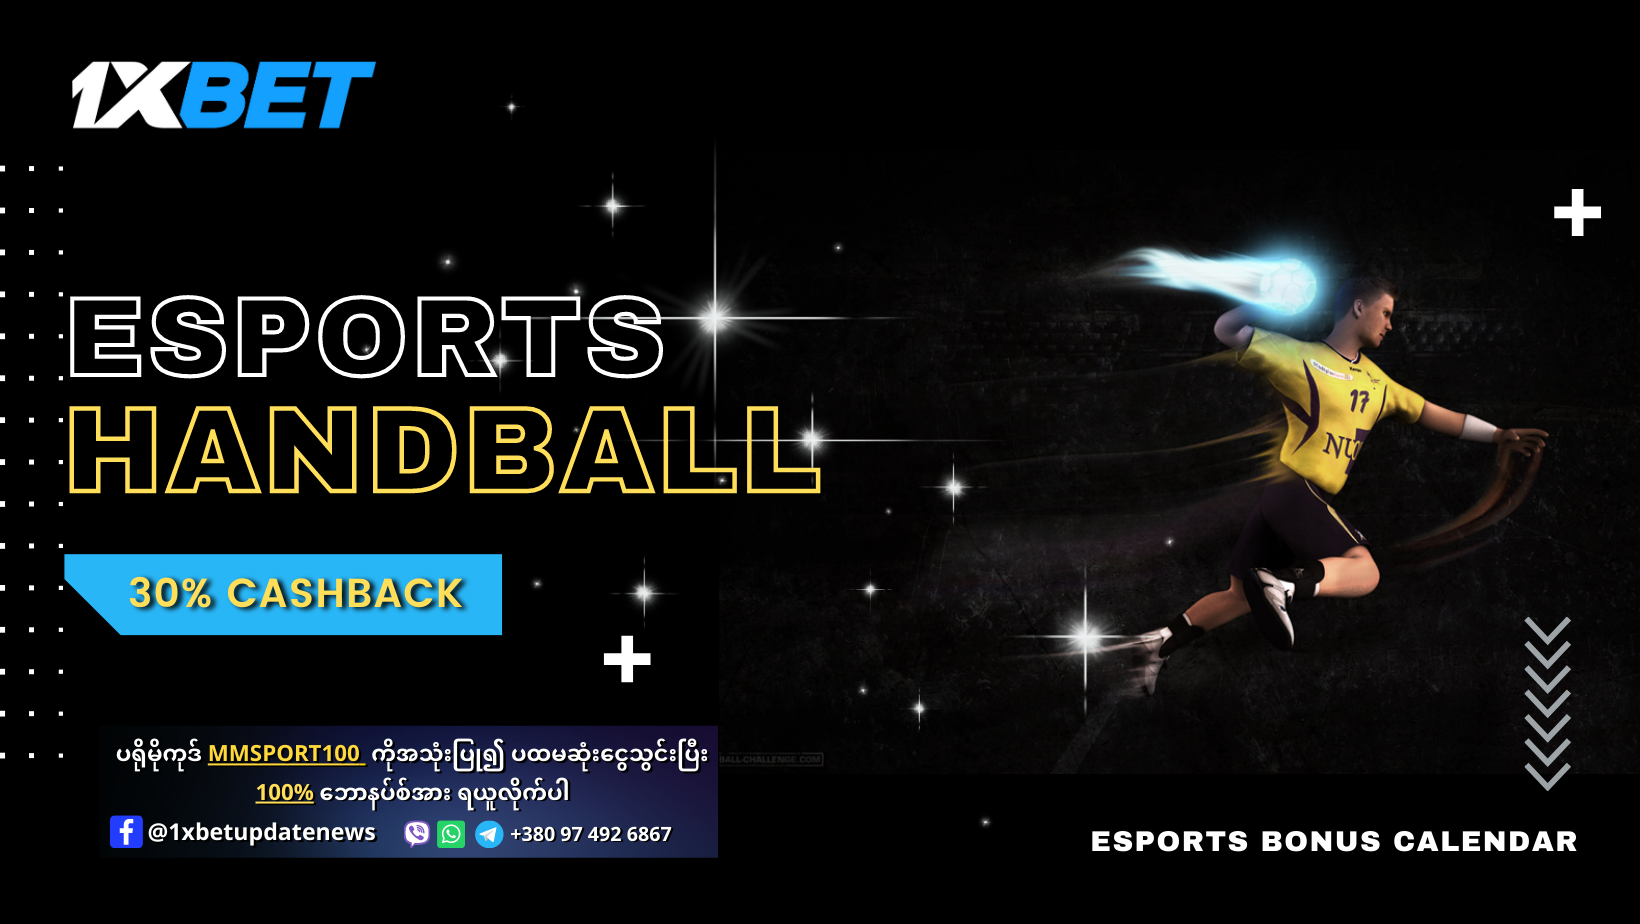 Esports Handball 1xBet Promotion